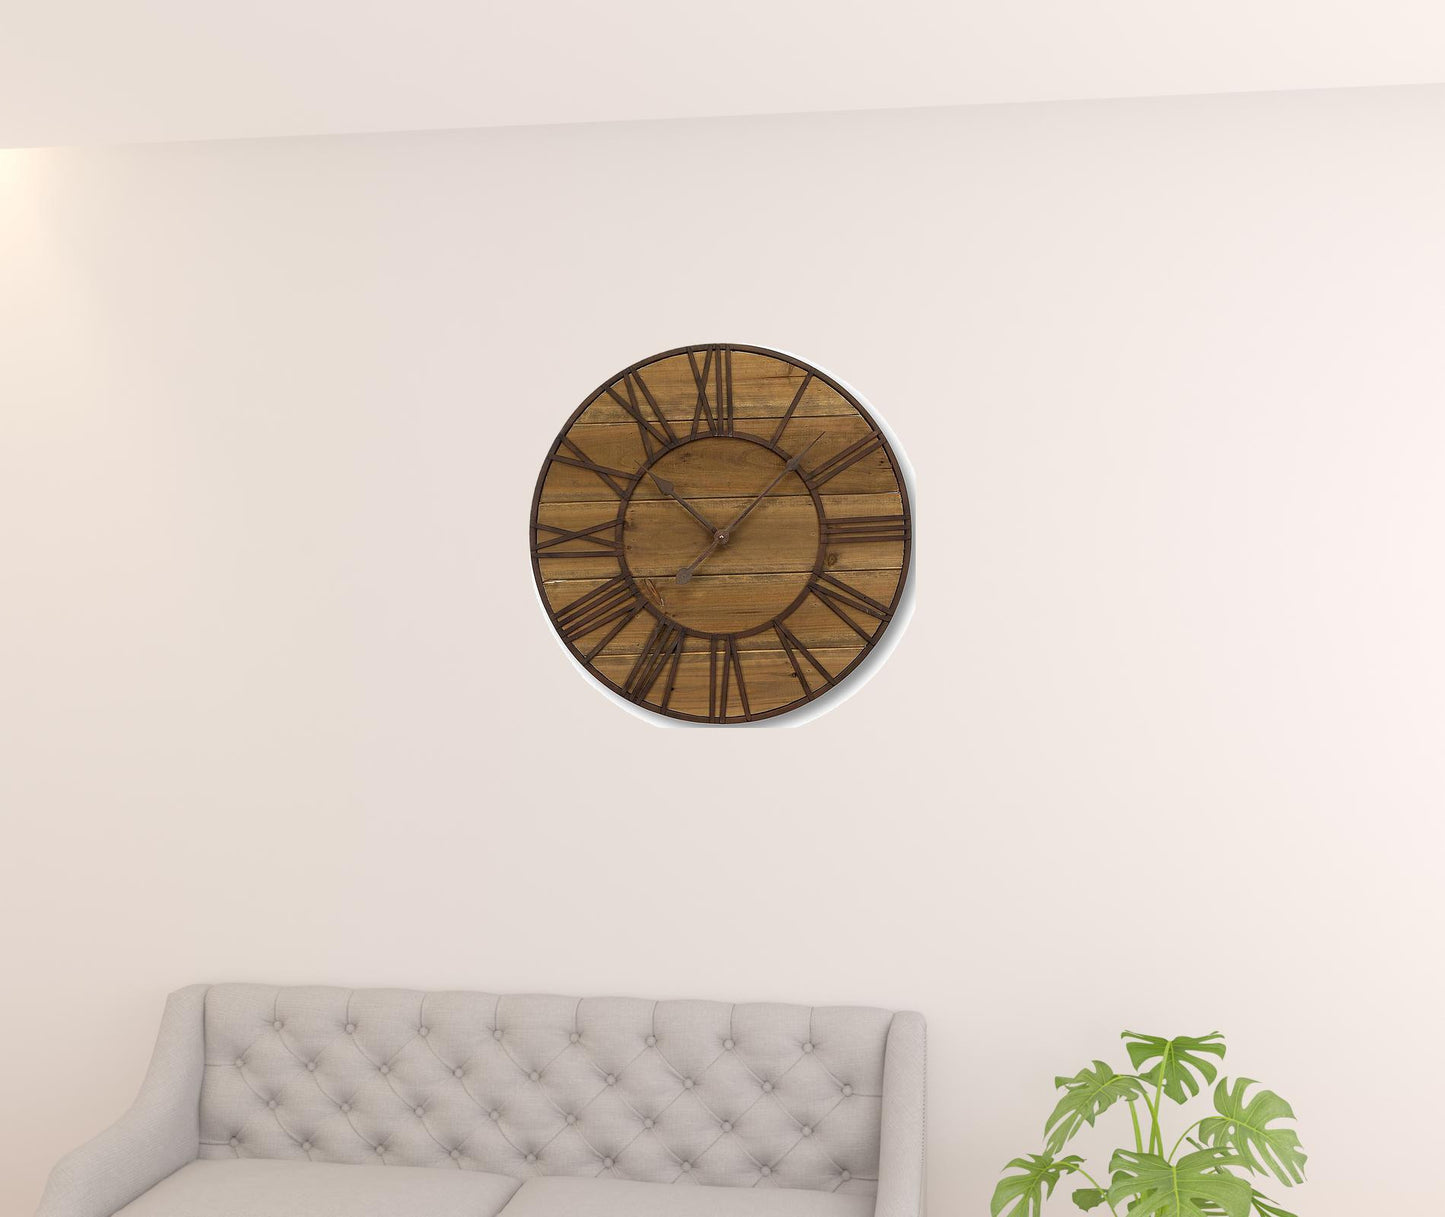 24" Circle Copper Solid Wood Analog Wall Clock